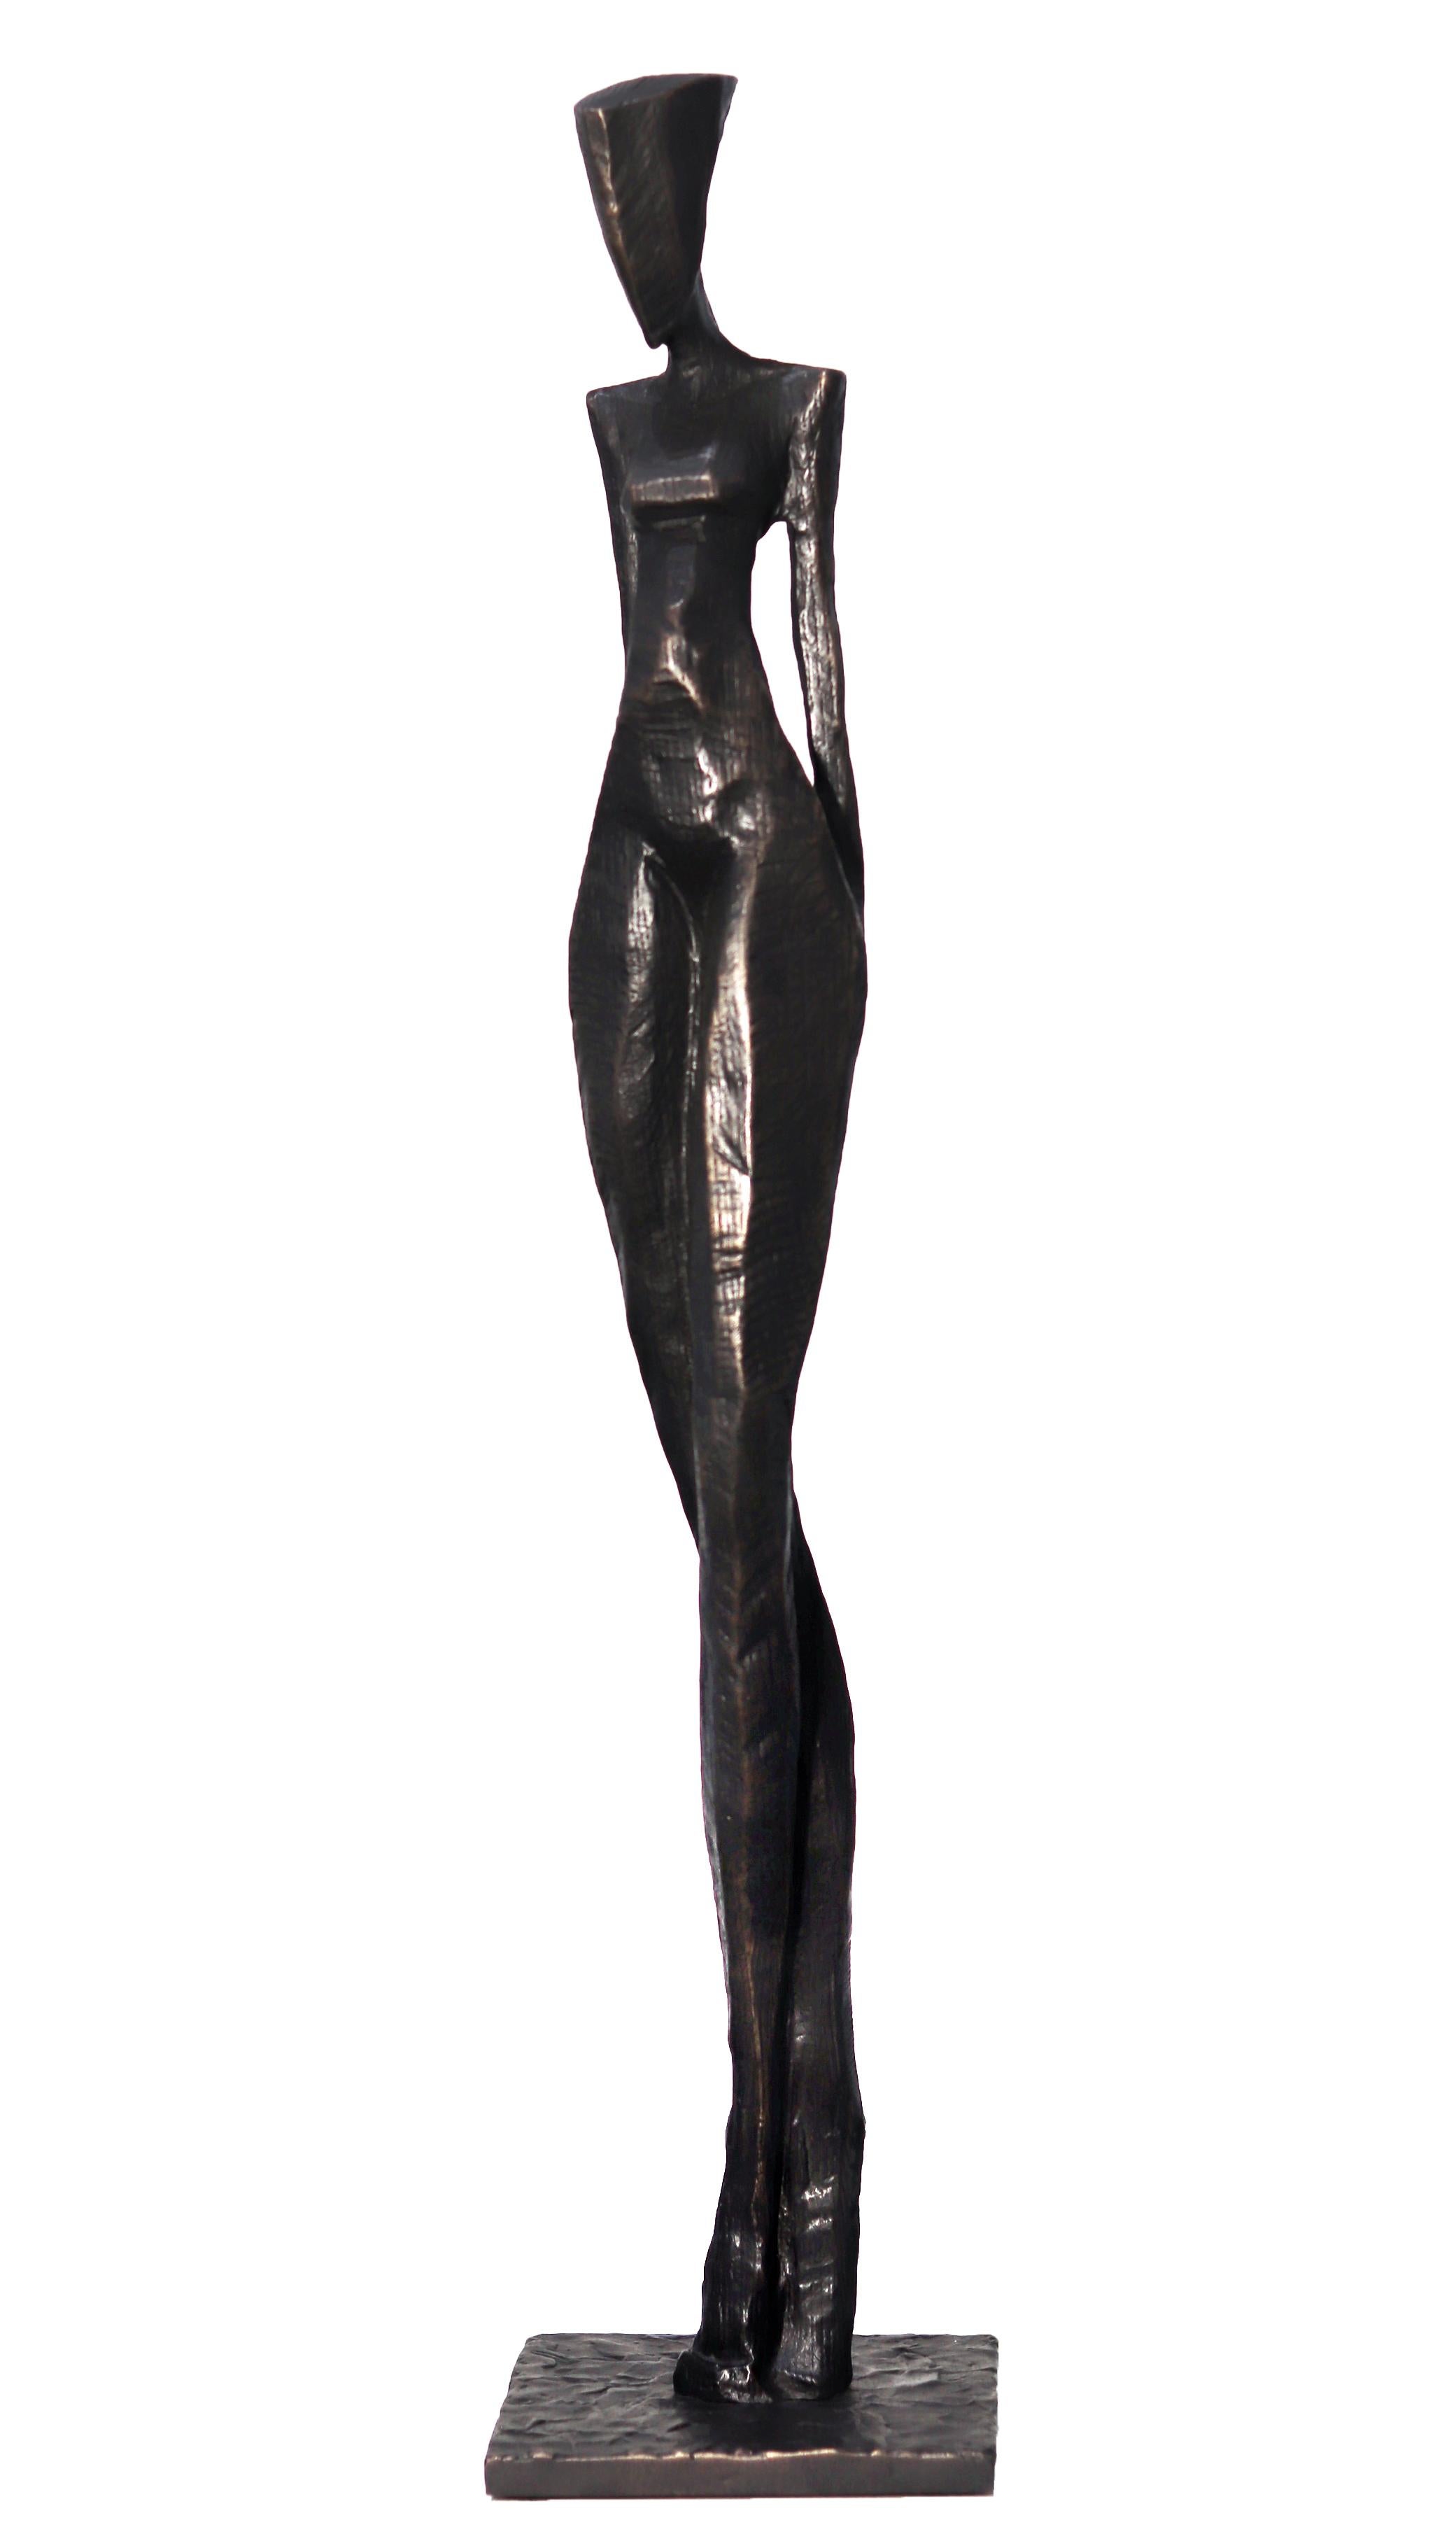 Nathalie (11/25) - large bronze sculpture